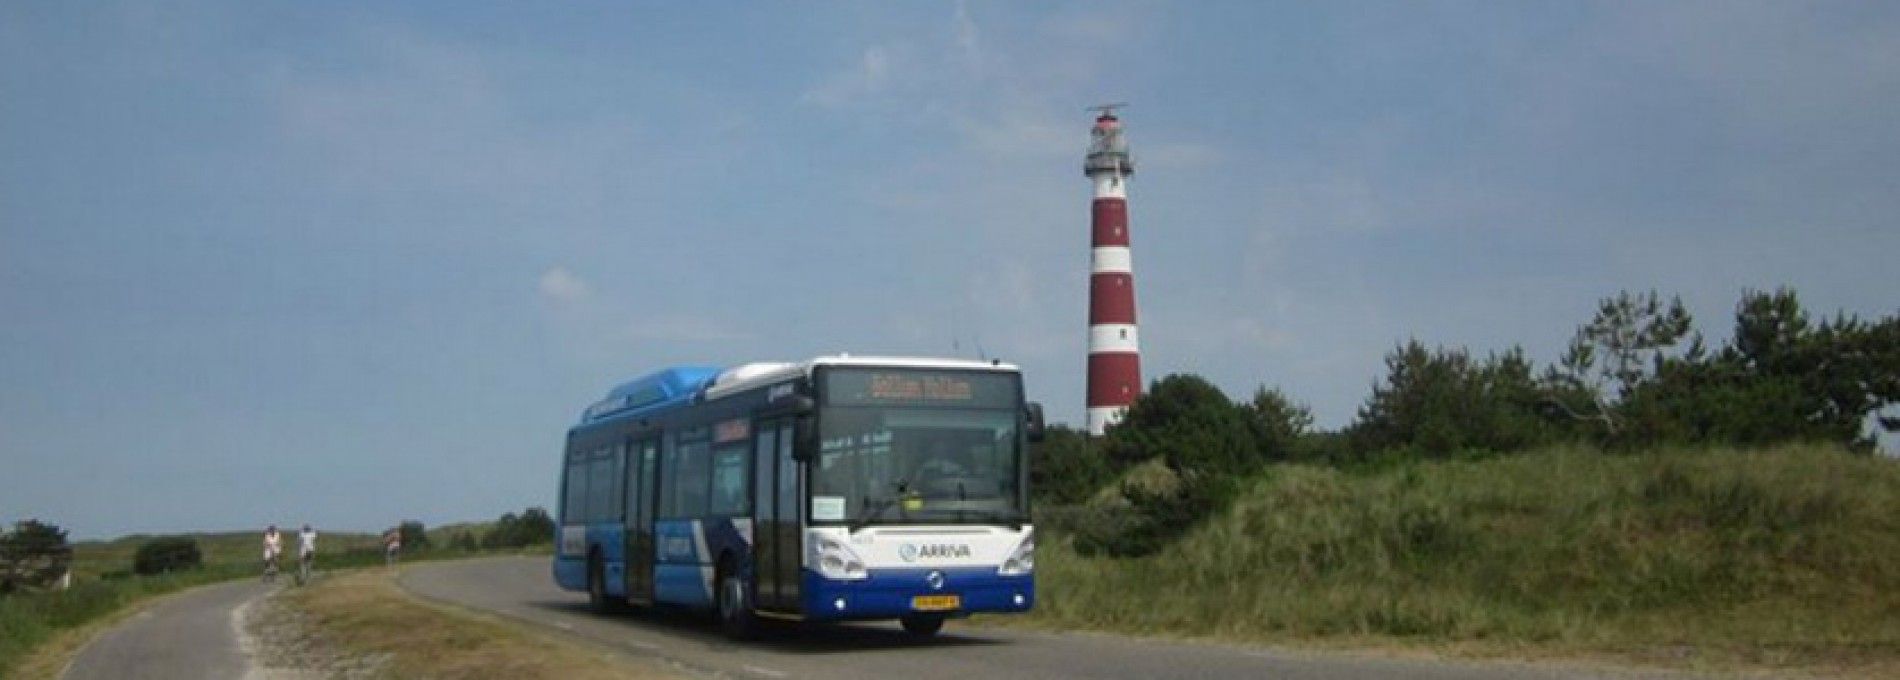 Busrondritarrangement - VVV Ameland